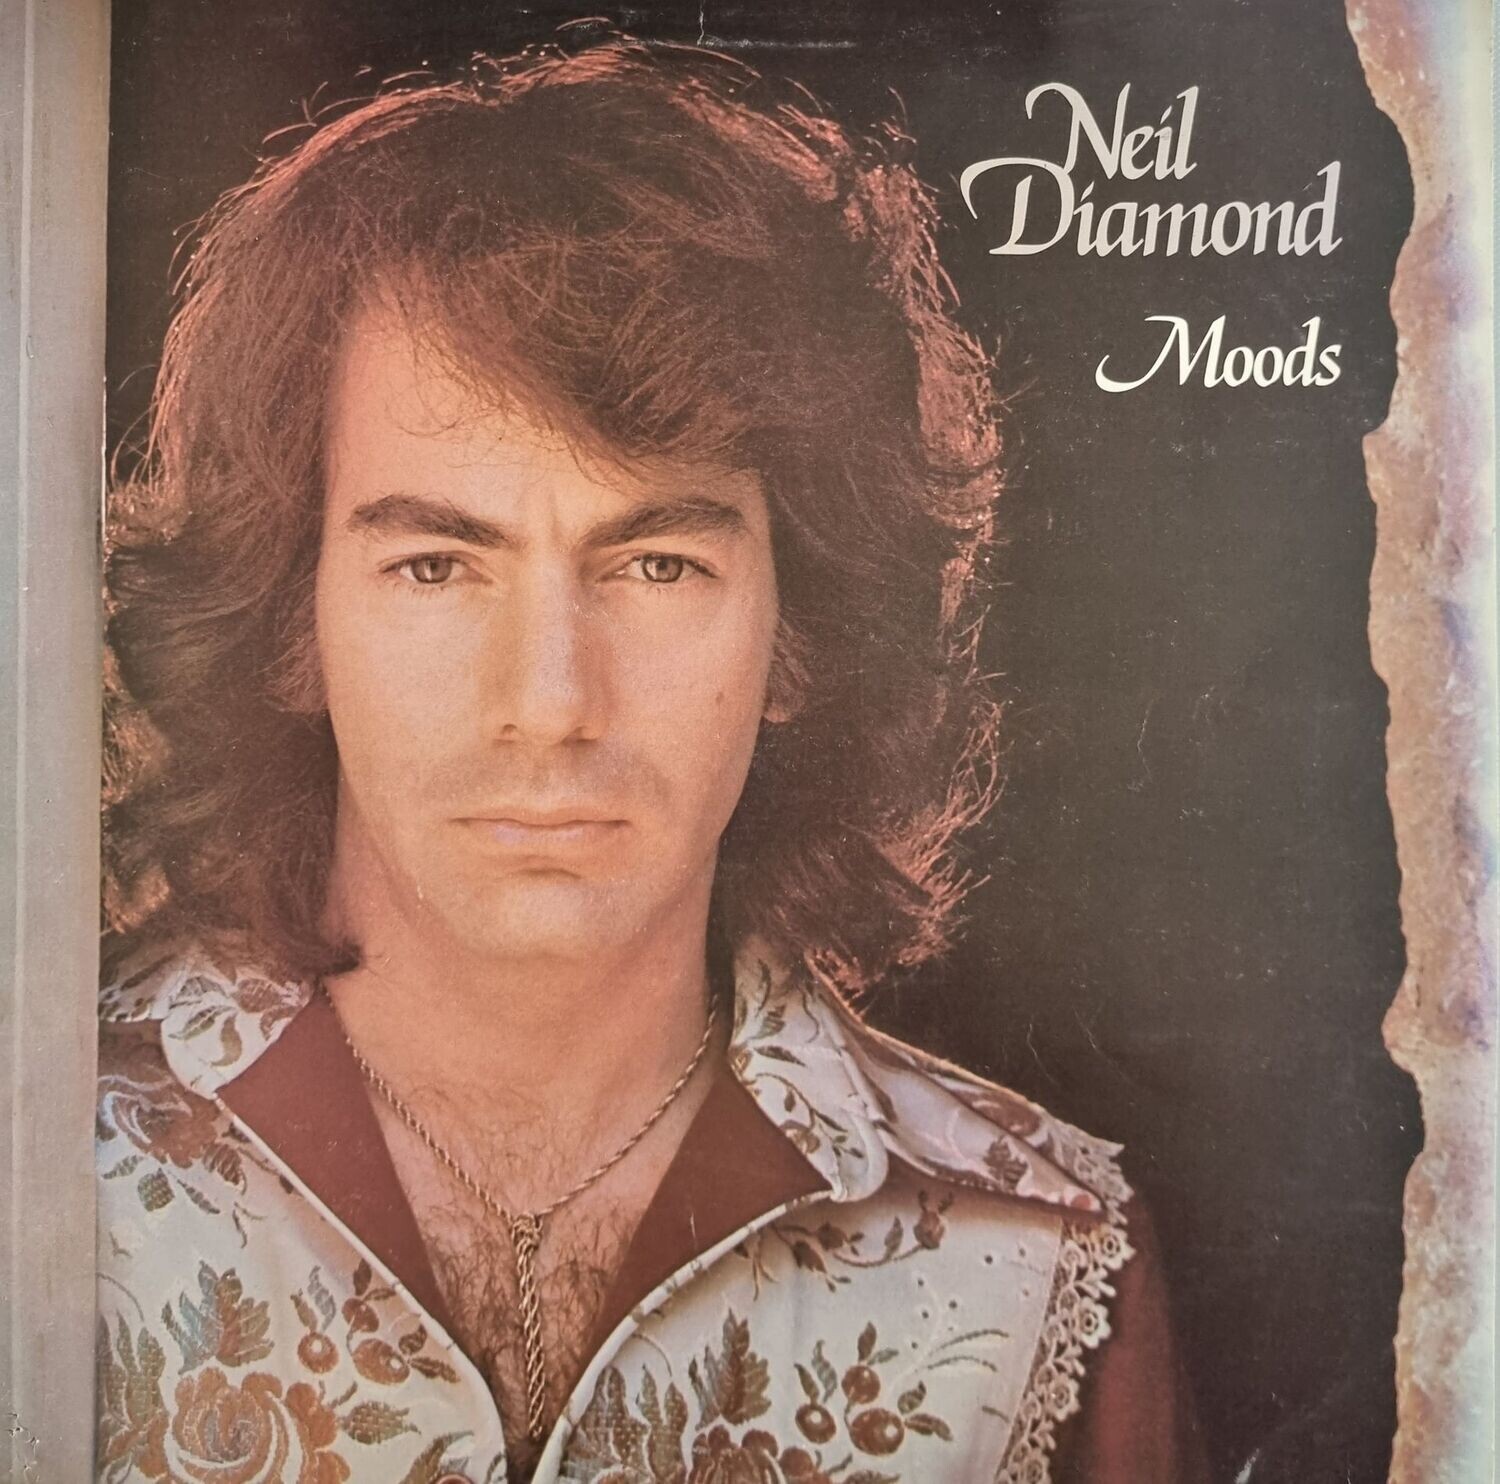 Neil Diamond - Moods (1972)